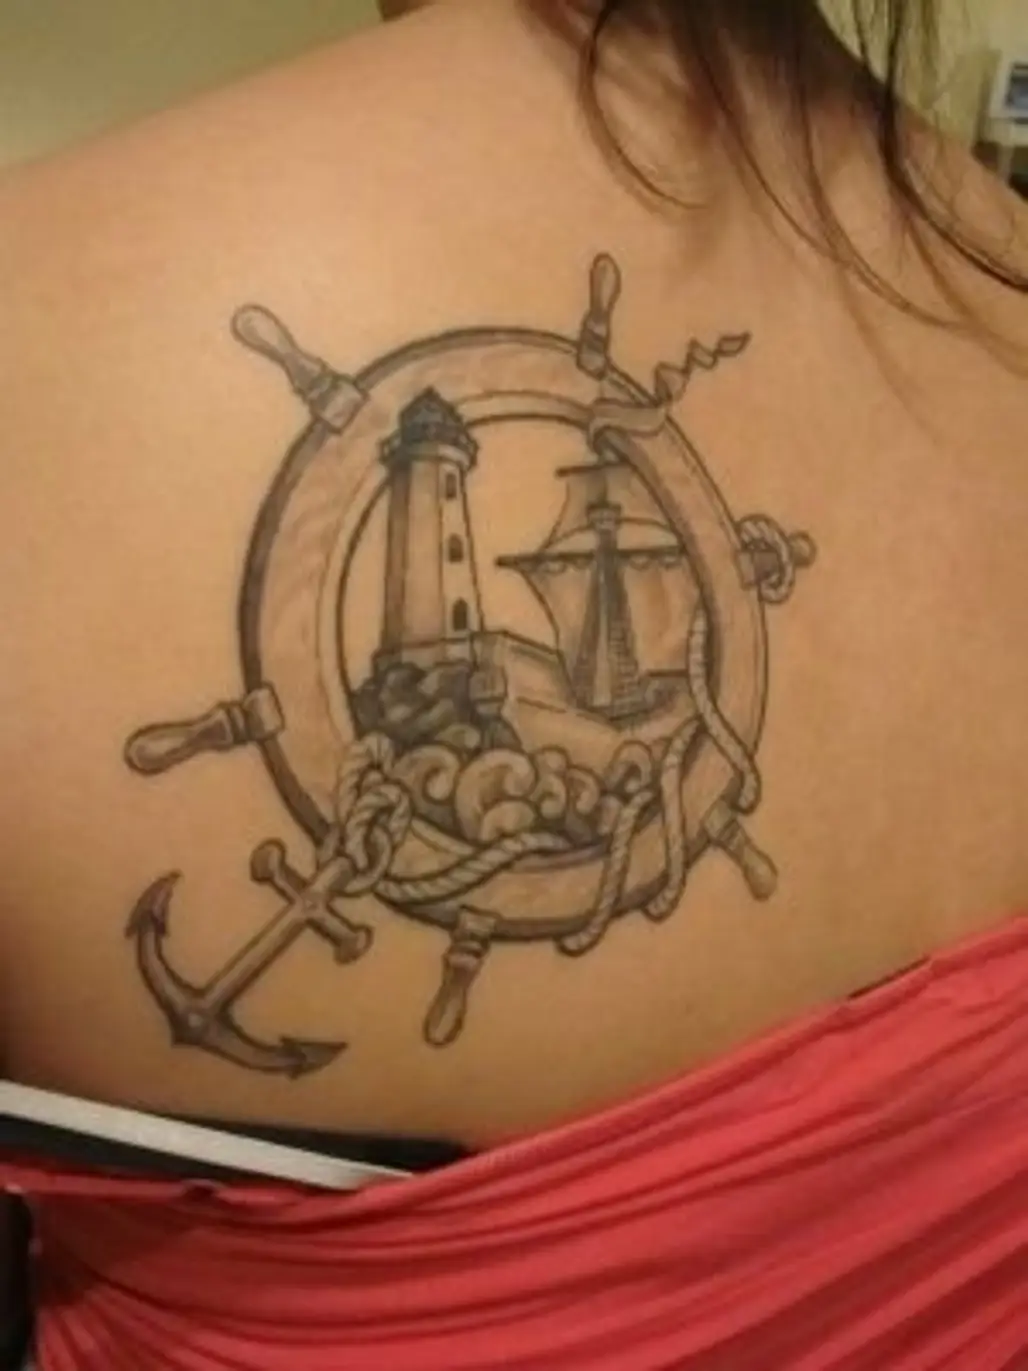 tattoo,arm,human body,trunk,chest,